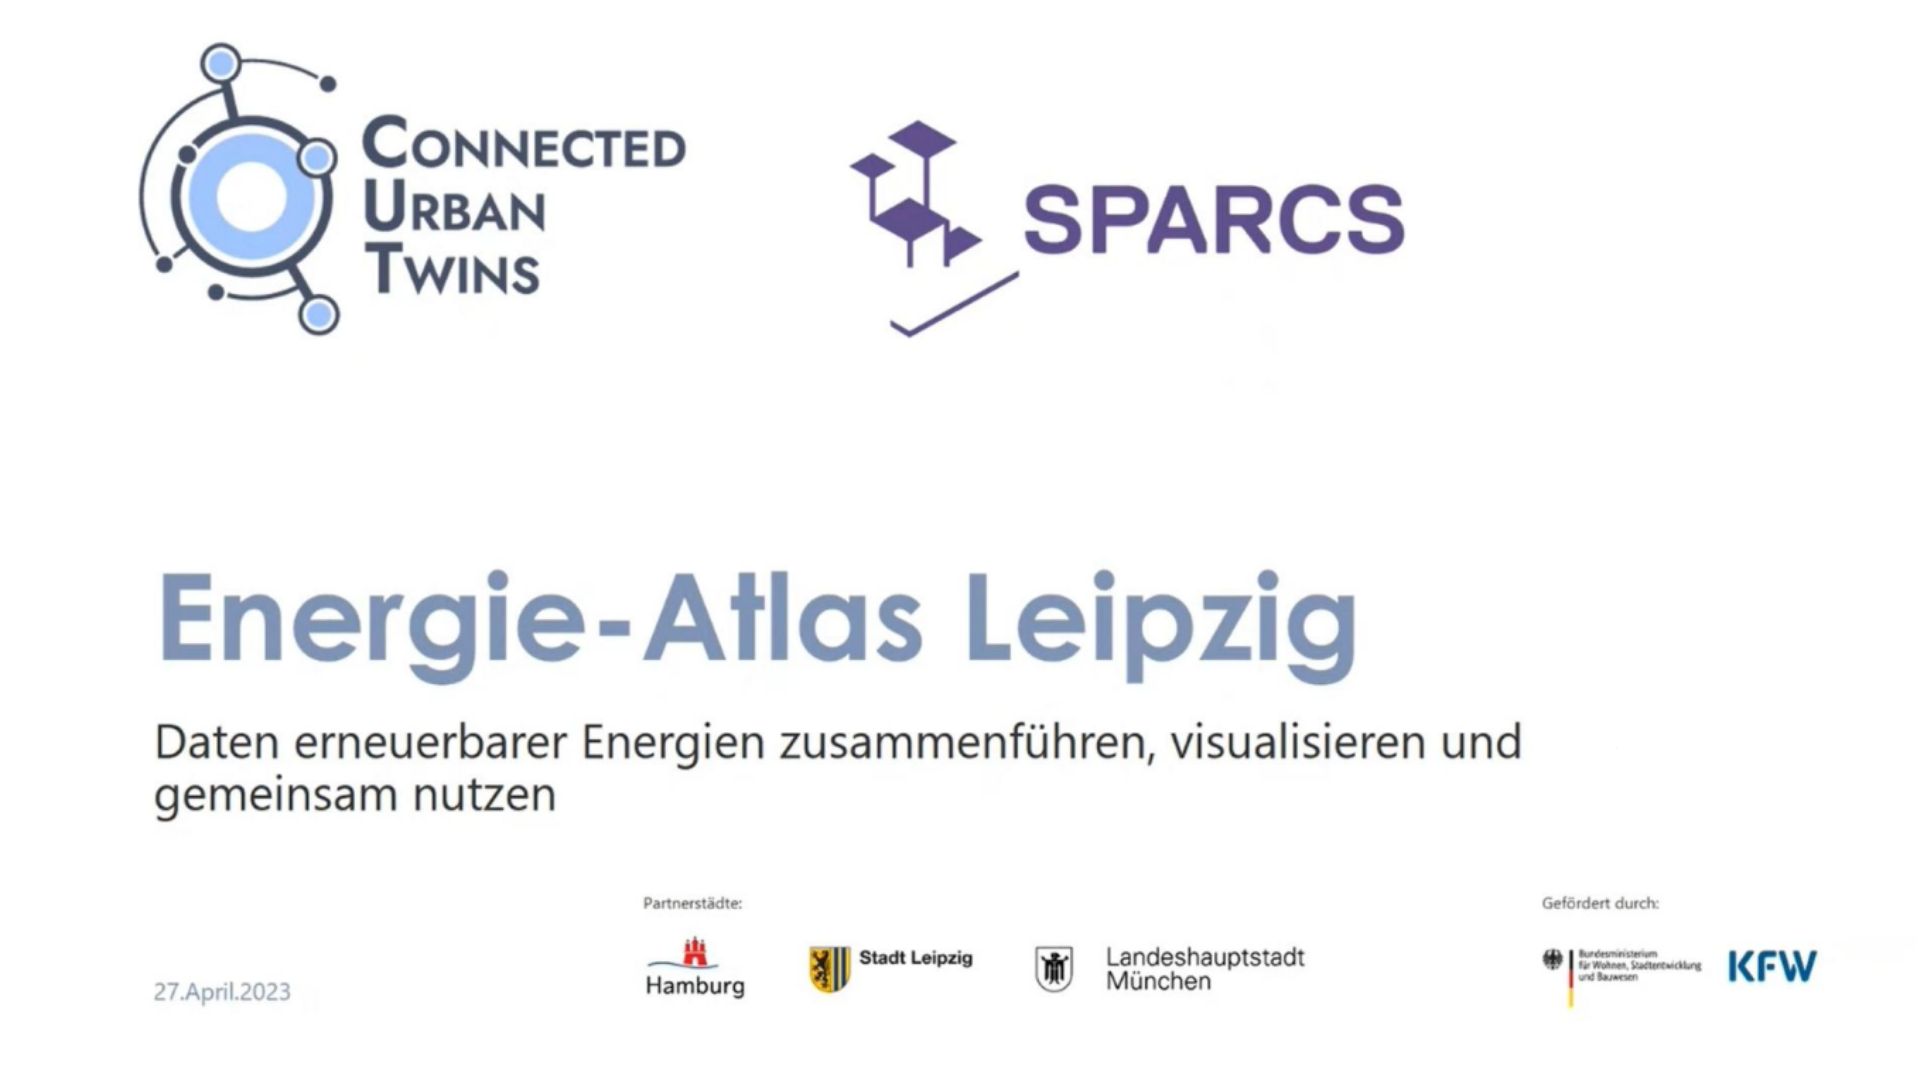 Energy Atlas Leipzig – Consolidating, visualizing and sharing data on renewable energies